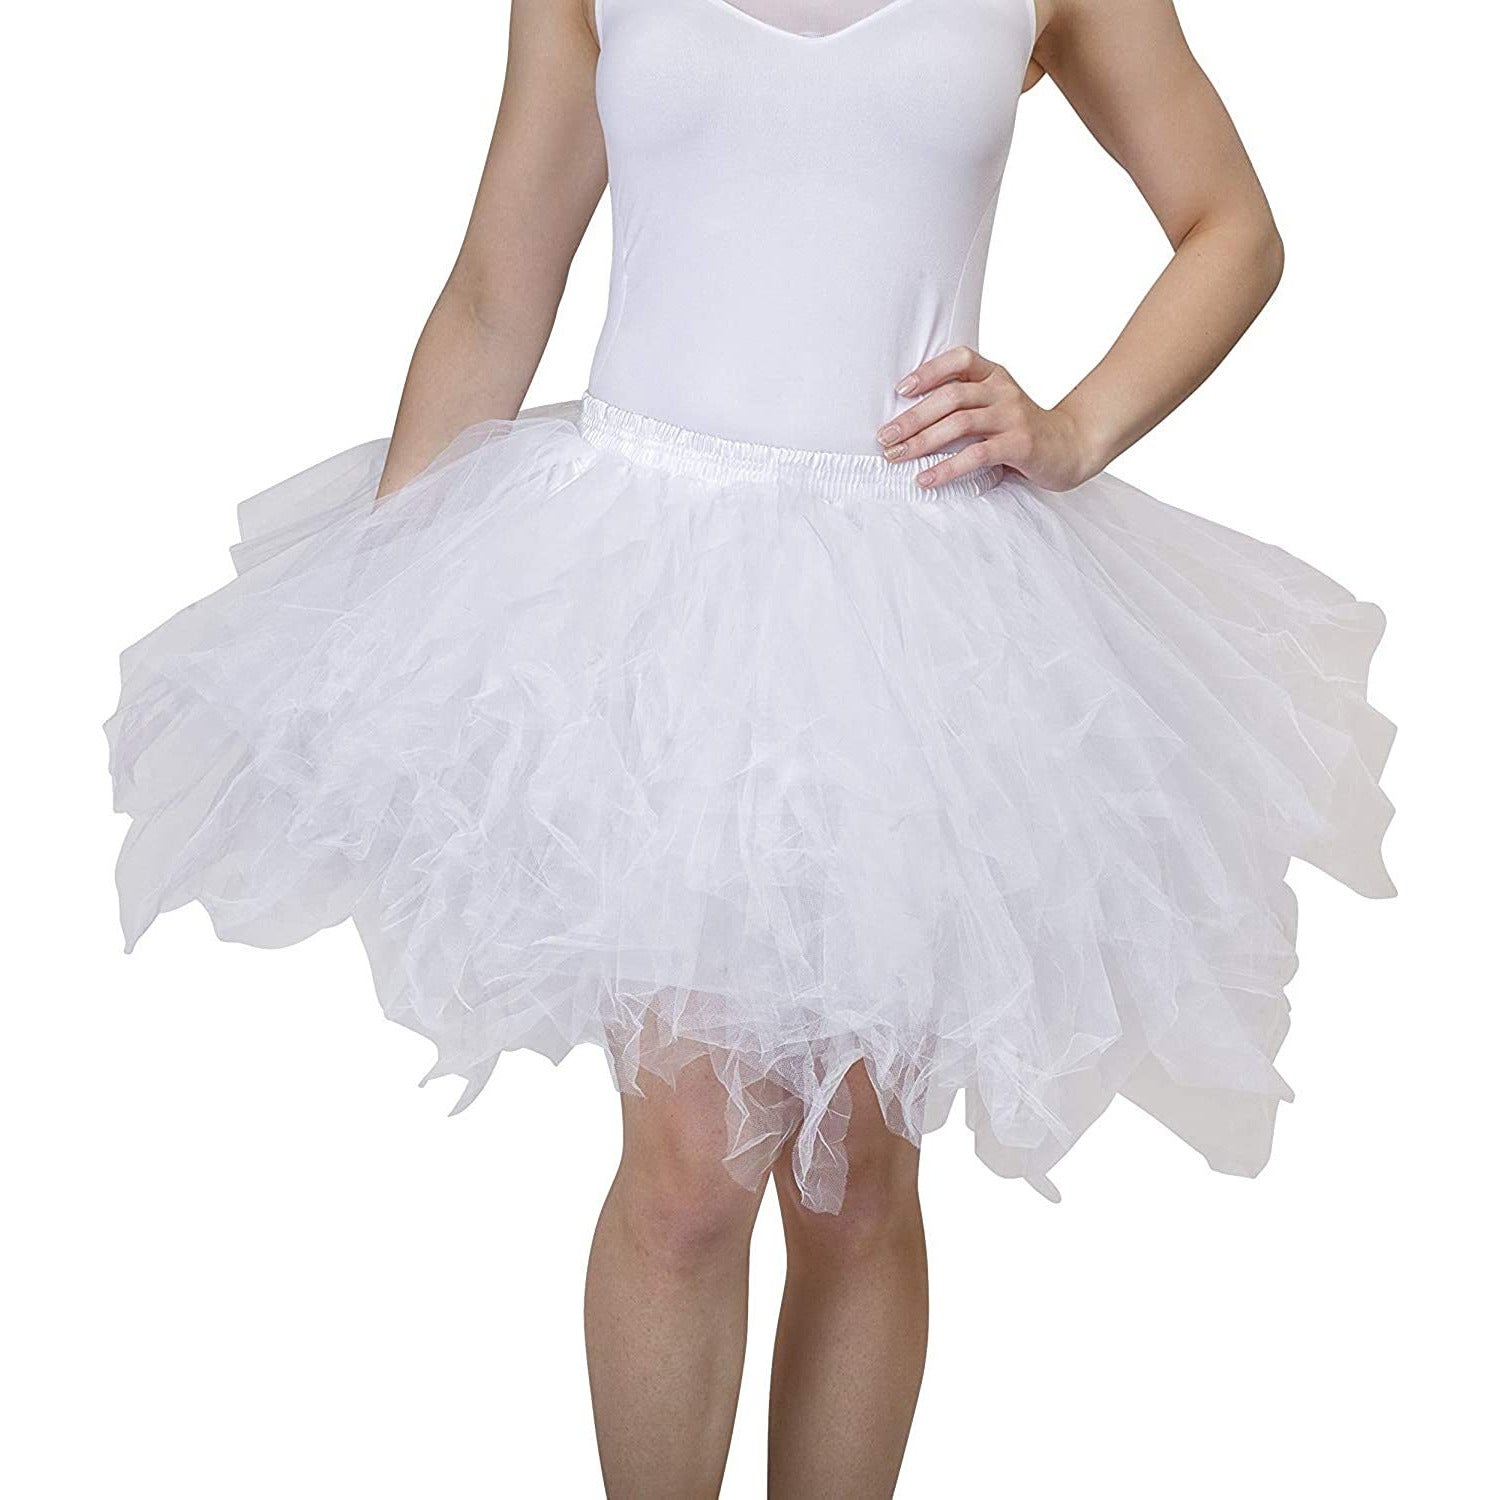 White Tutu Skirt for Adults